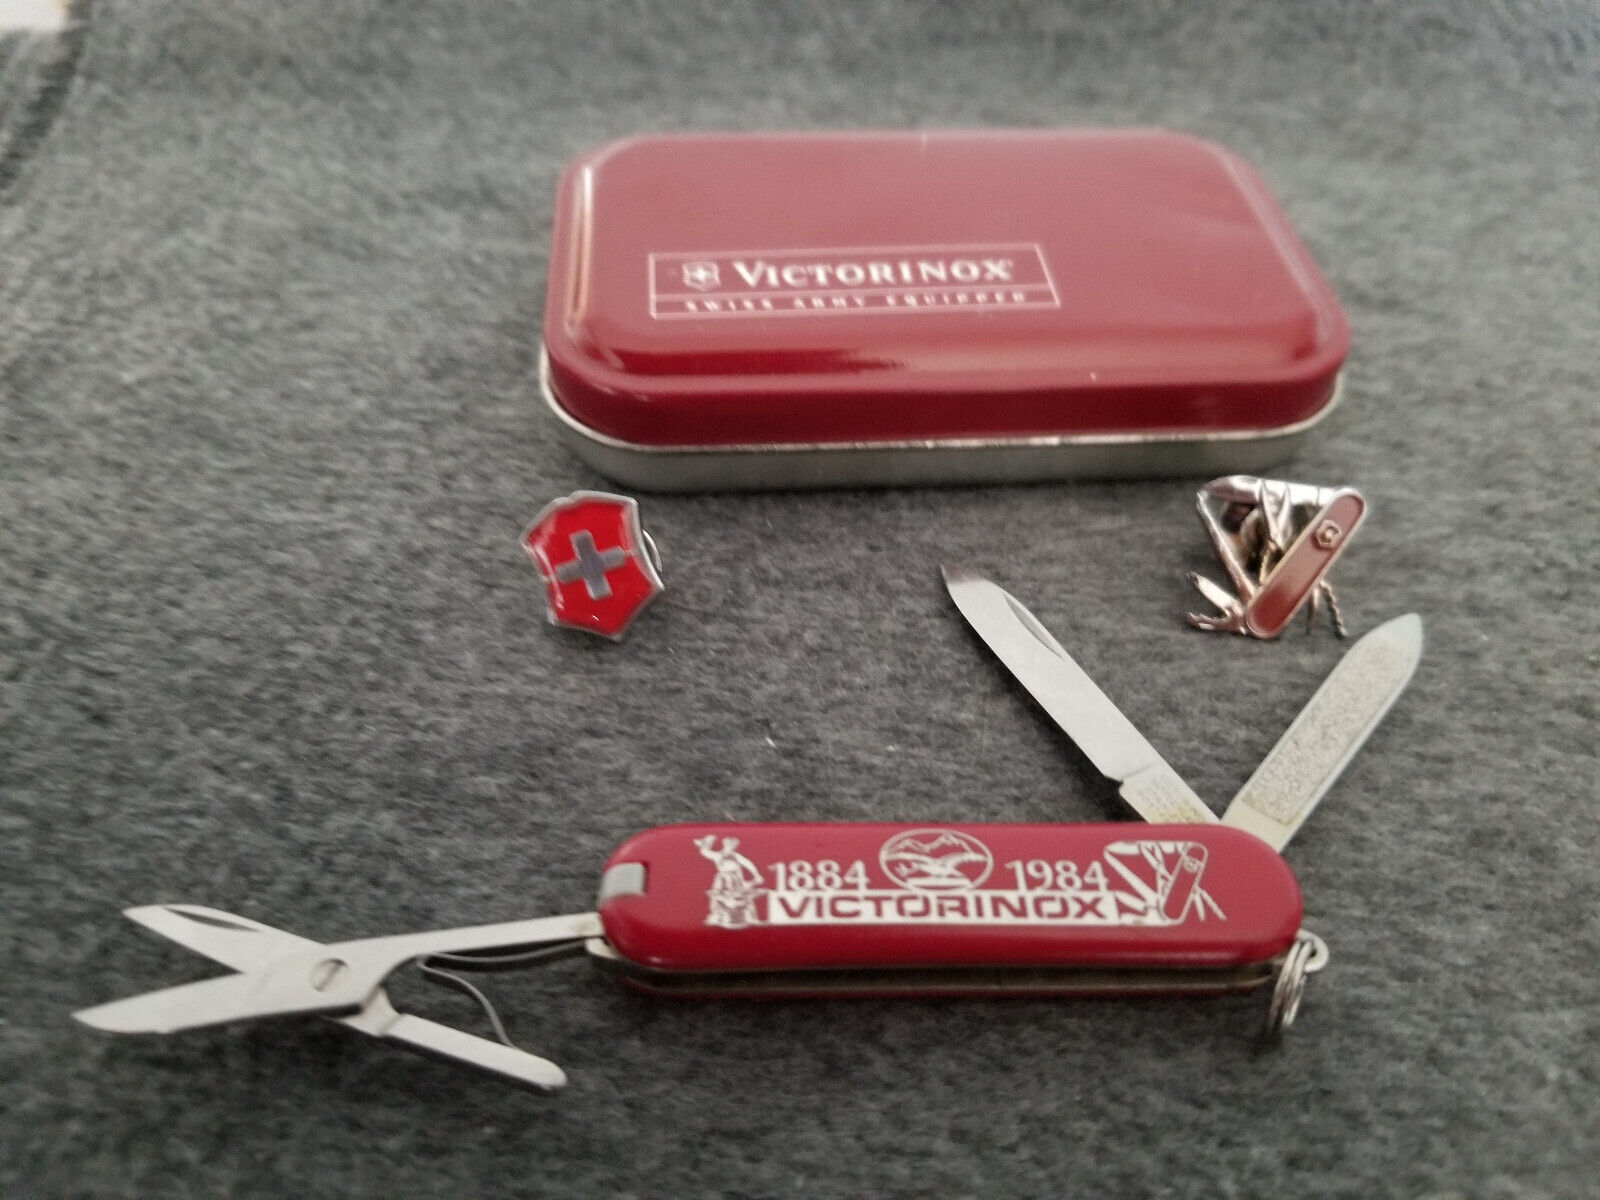 Victorinox rare limited edition 1984 Anniversary and lapel pins